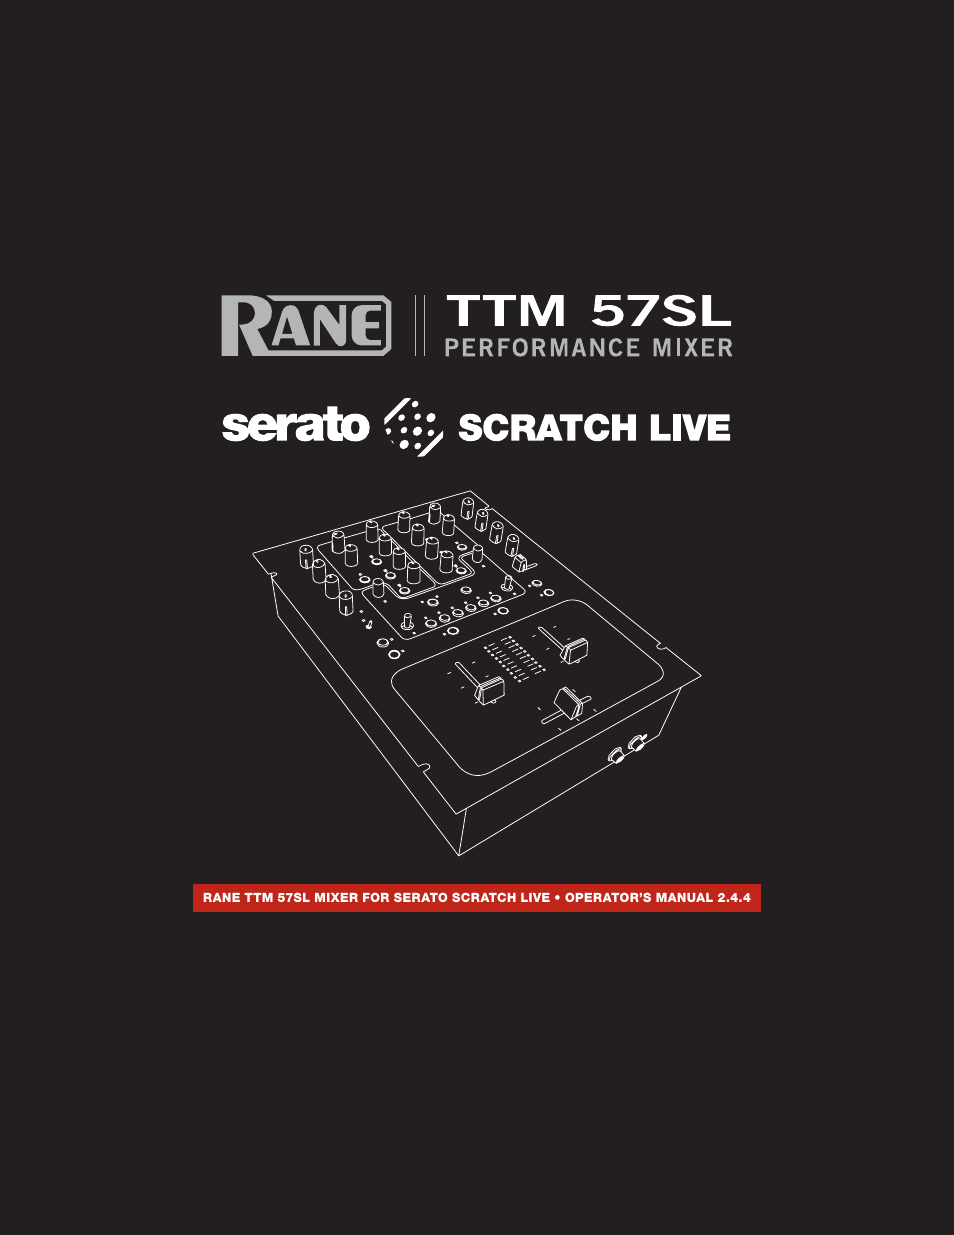 TTM 57SL Manual for Serato Scratch Live 2.44